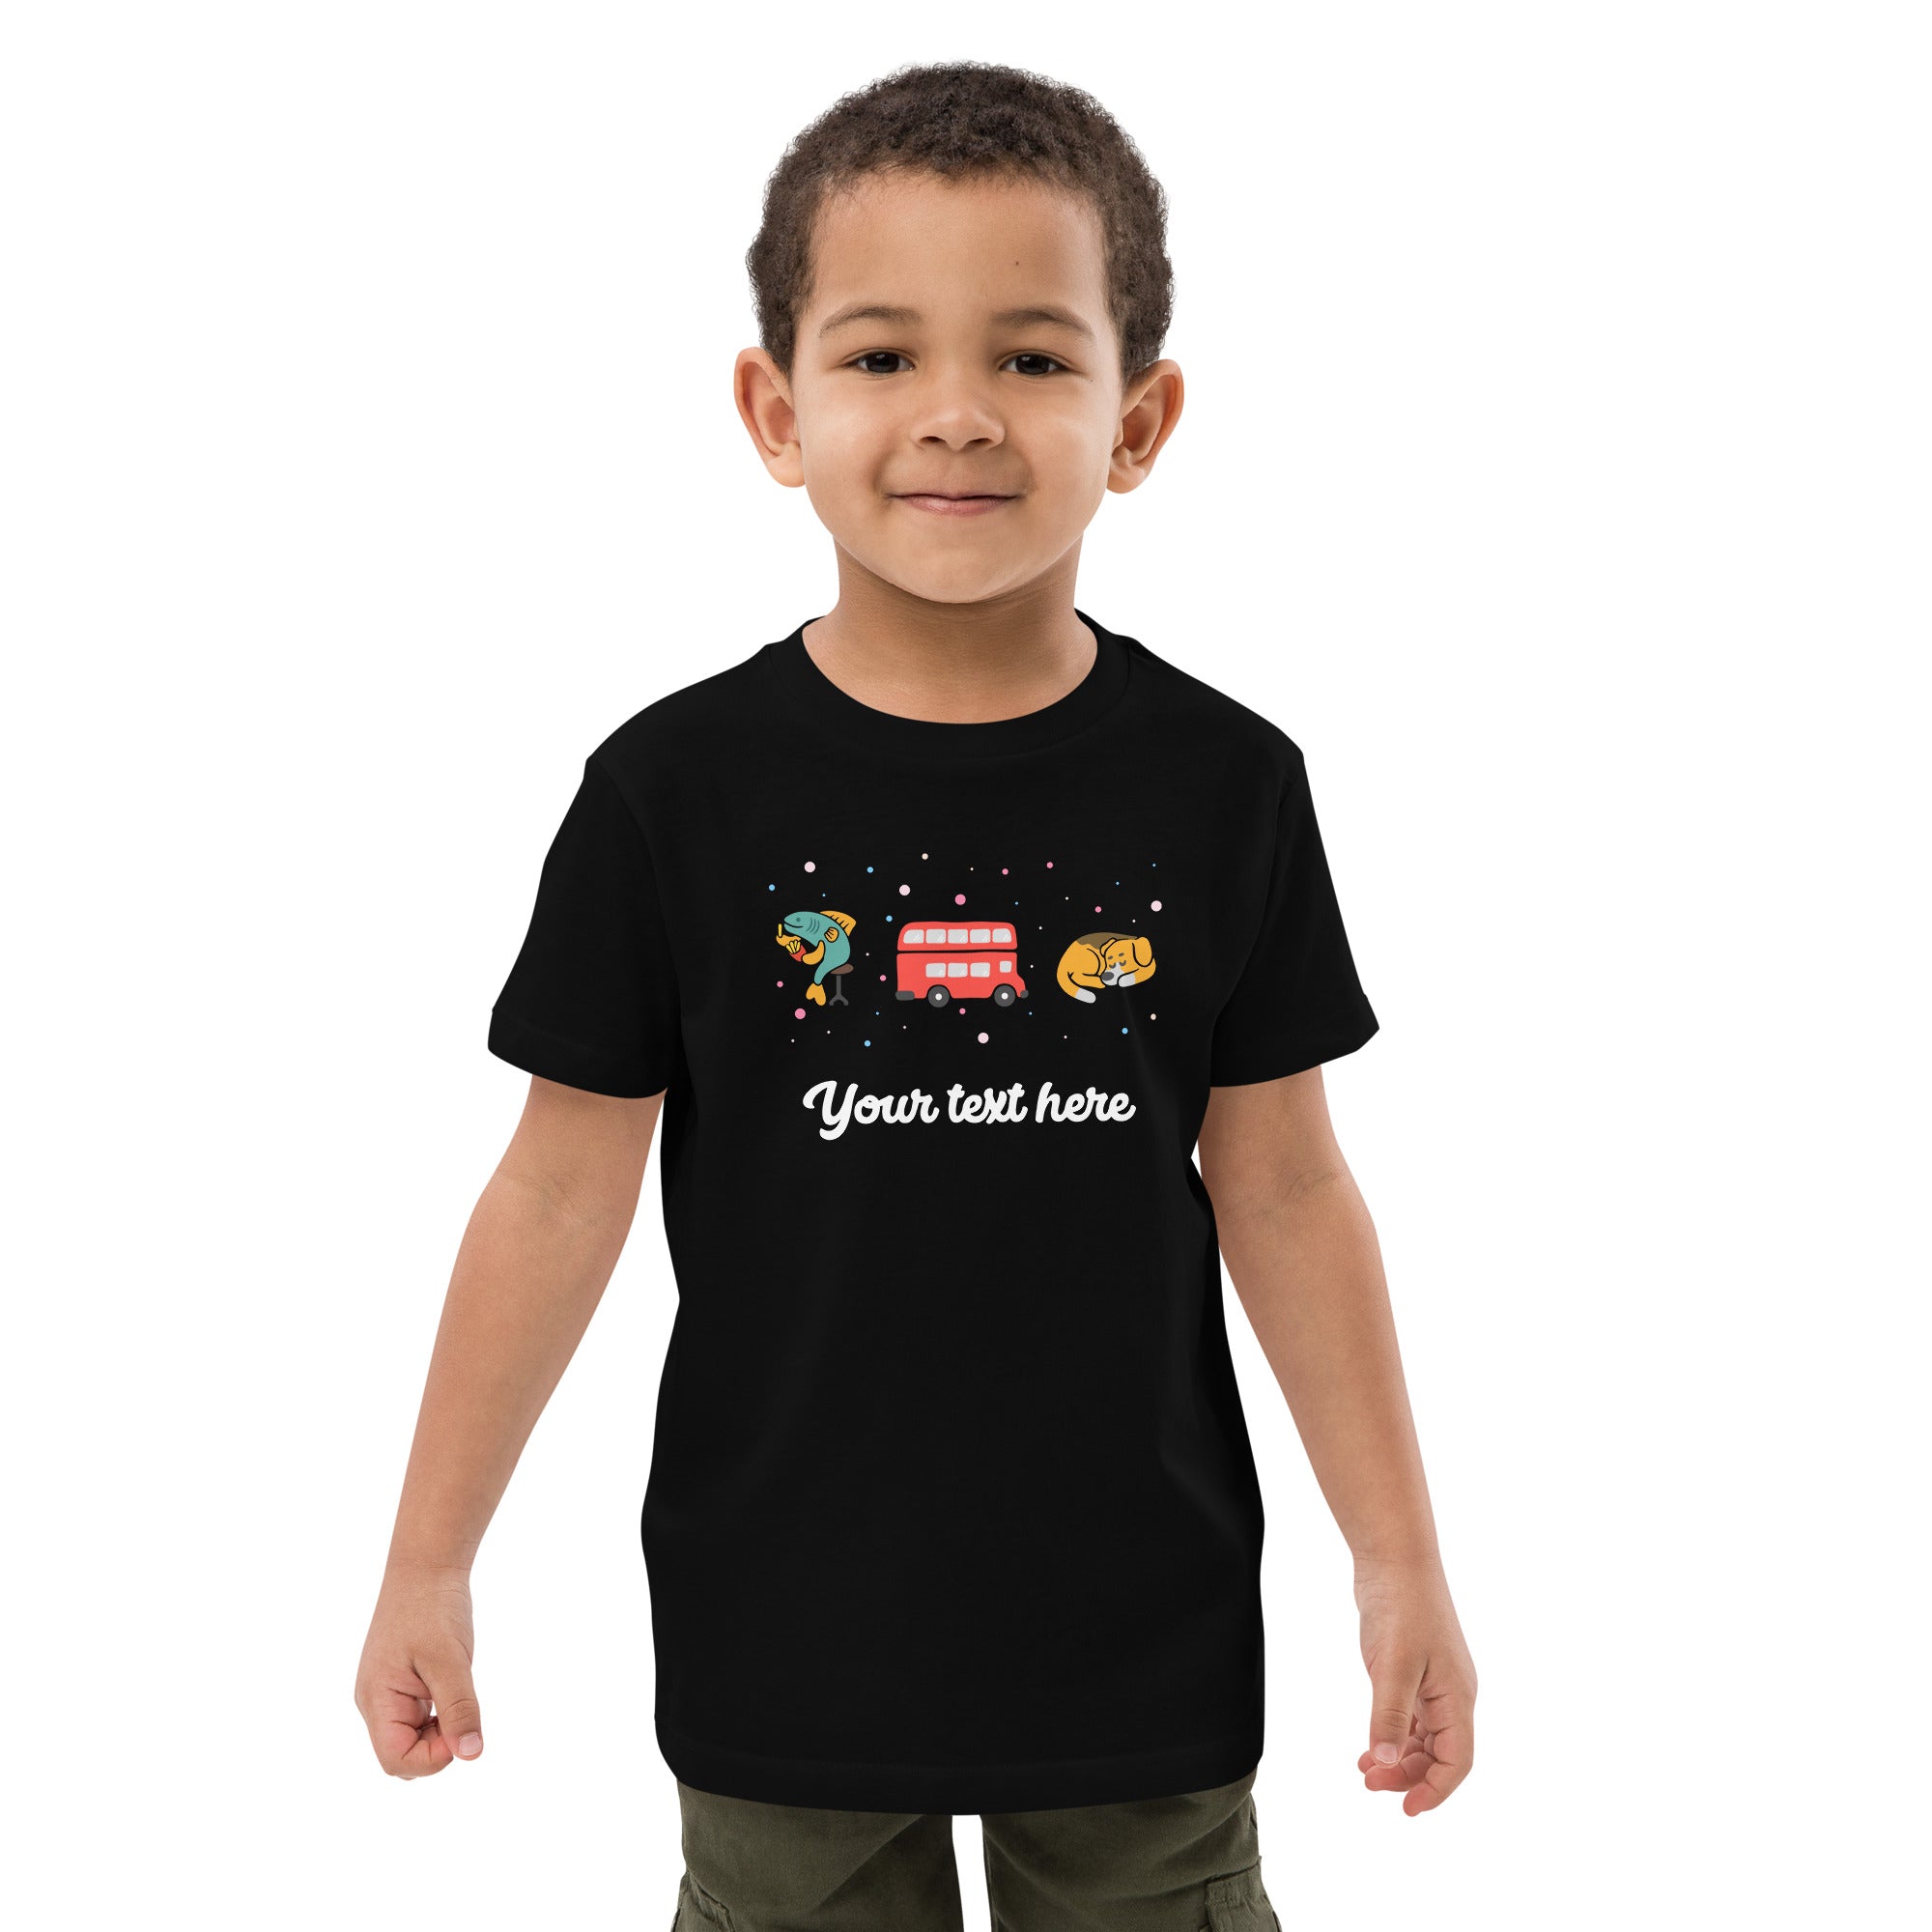 Personalised Custom Text - Organic Cotton Kids T-Shirt - London Doodles - Fish & Chips / Bus / Corgi - Black 2